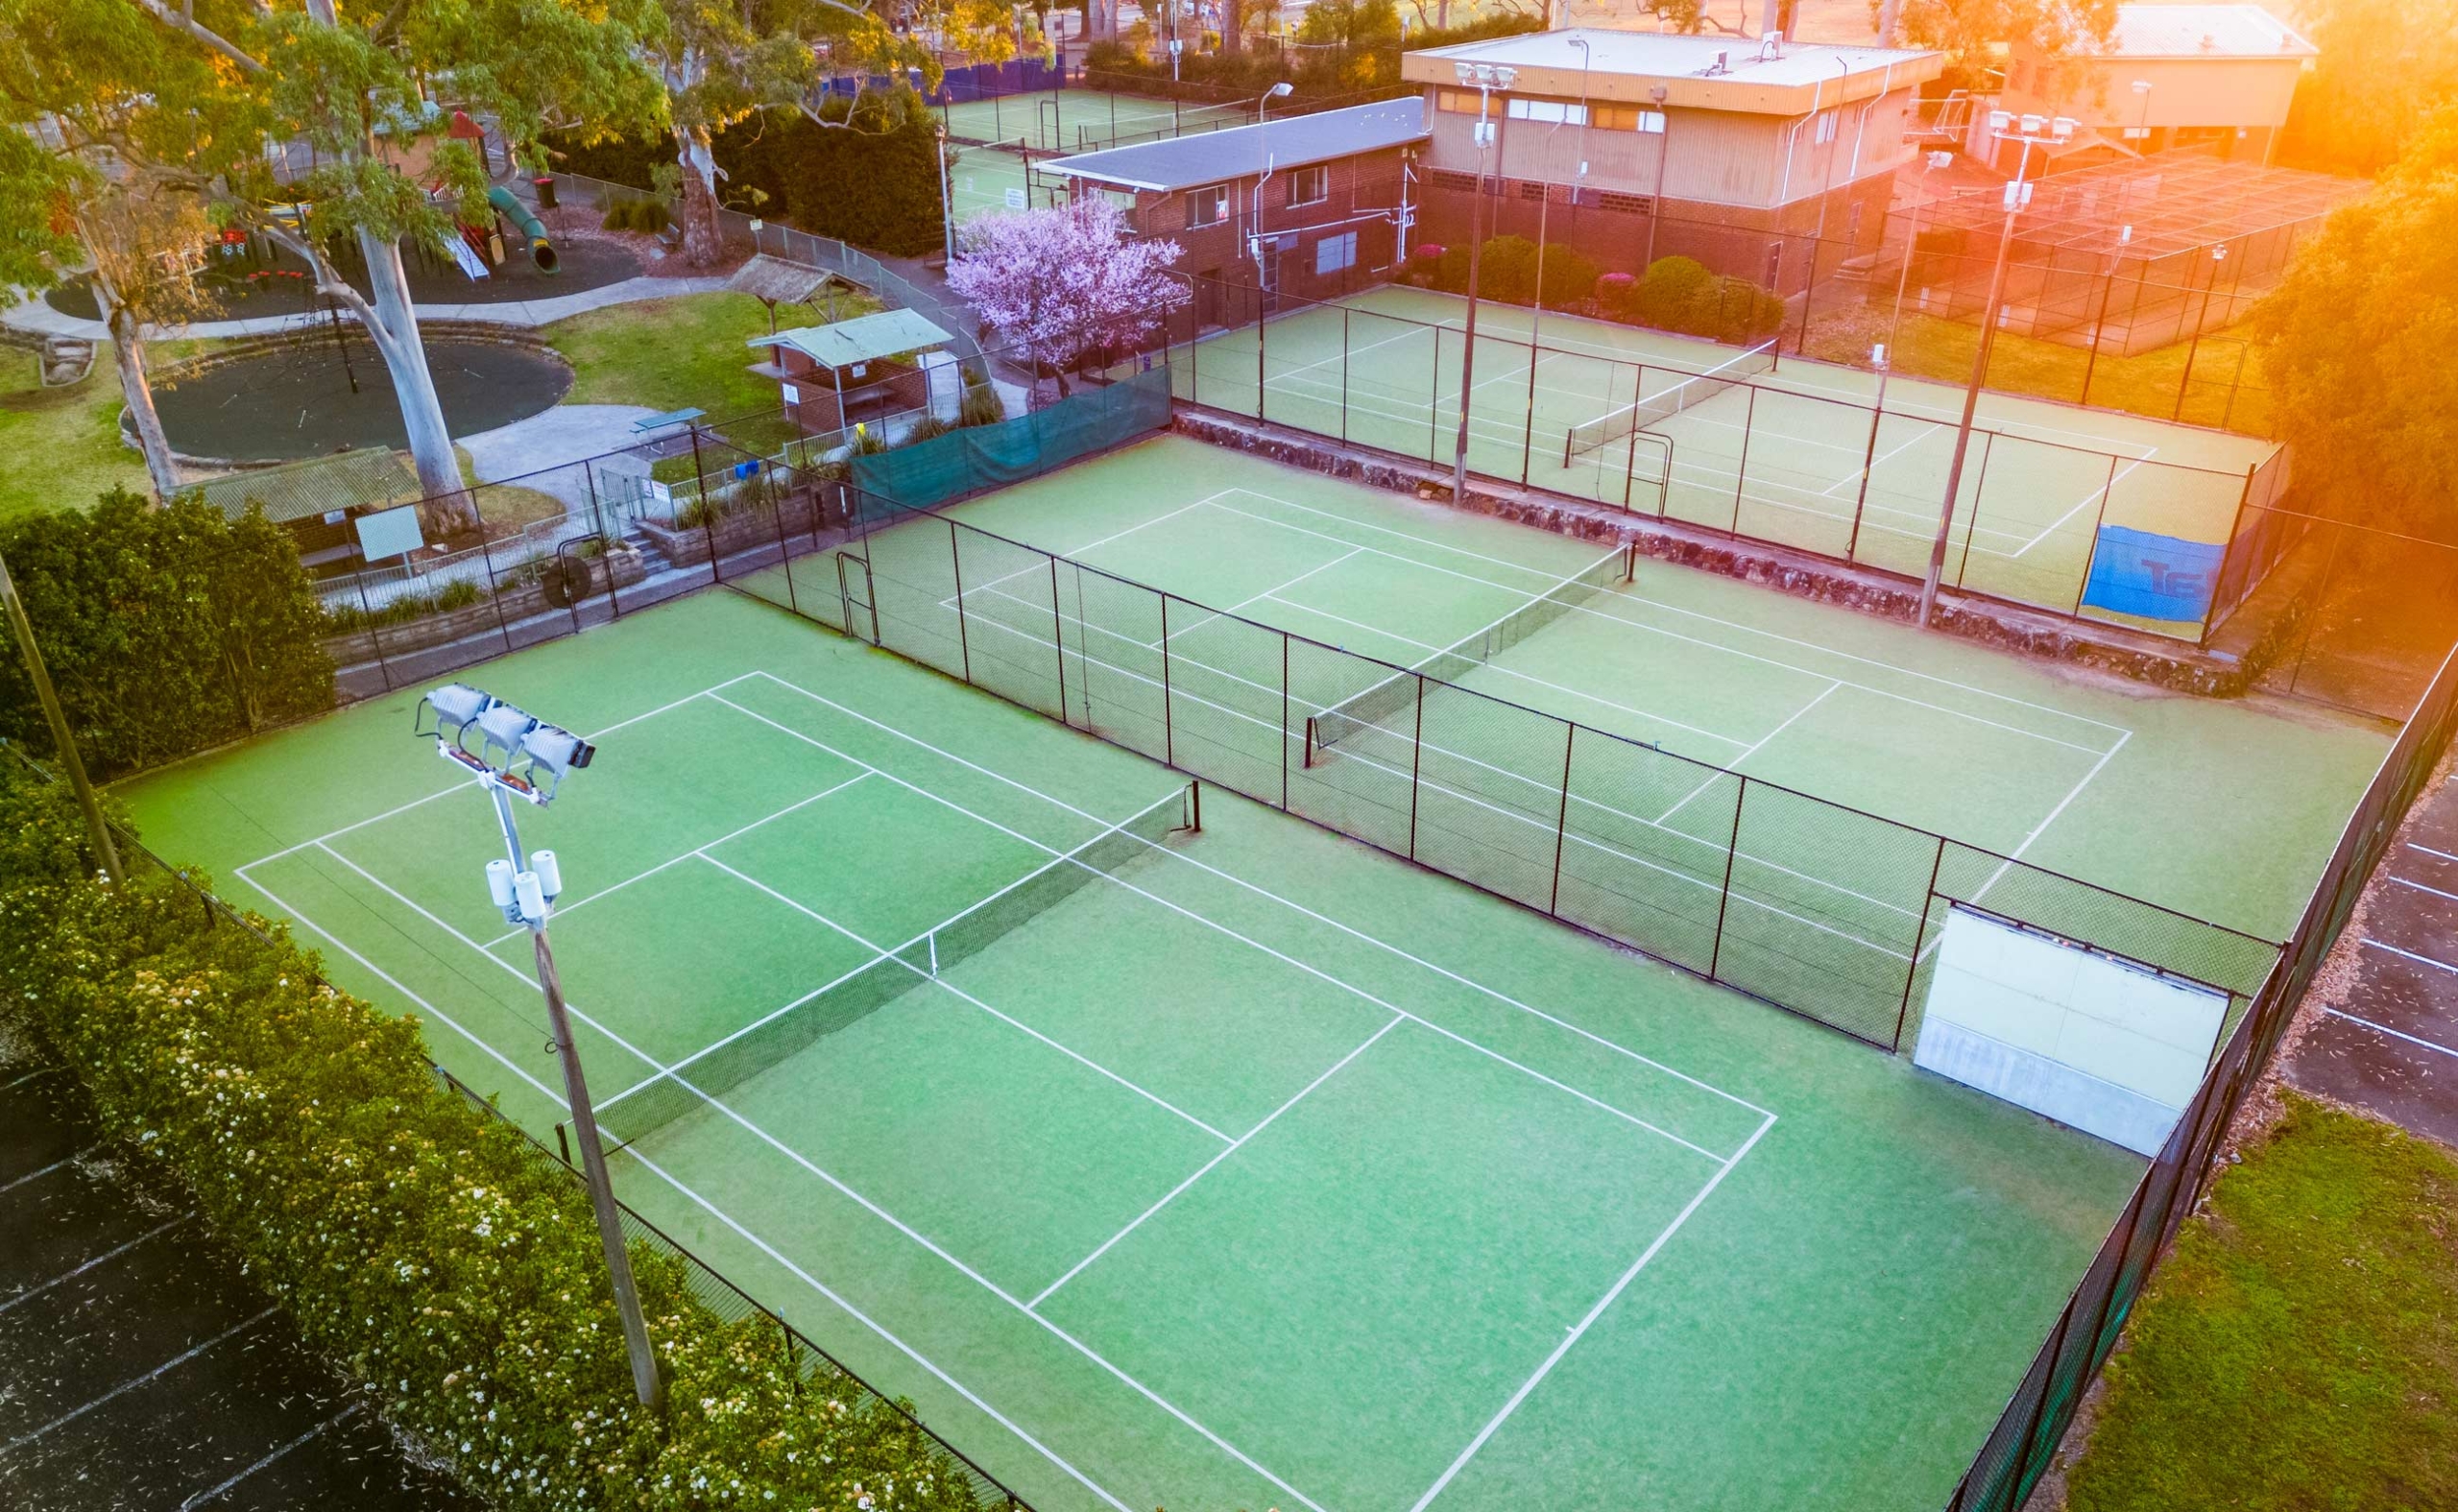 North Rocks Tennis Courts